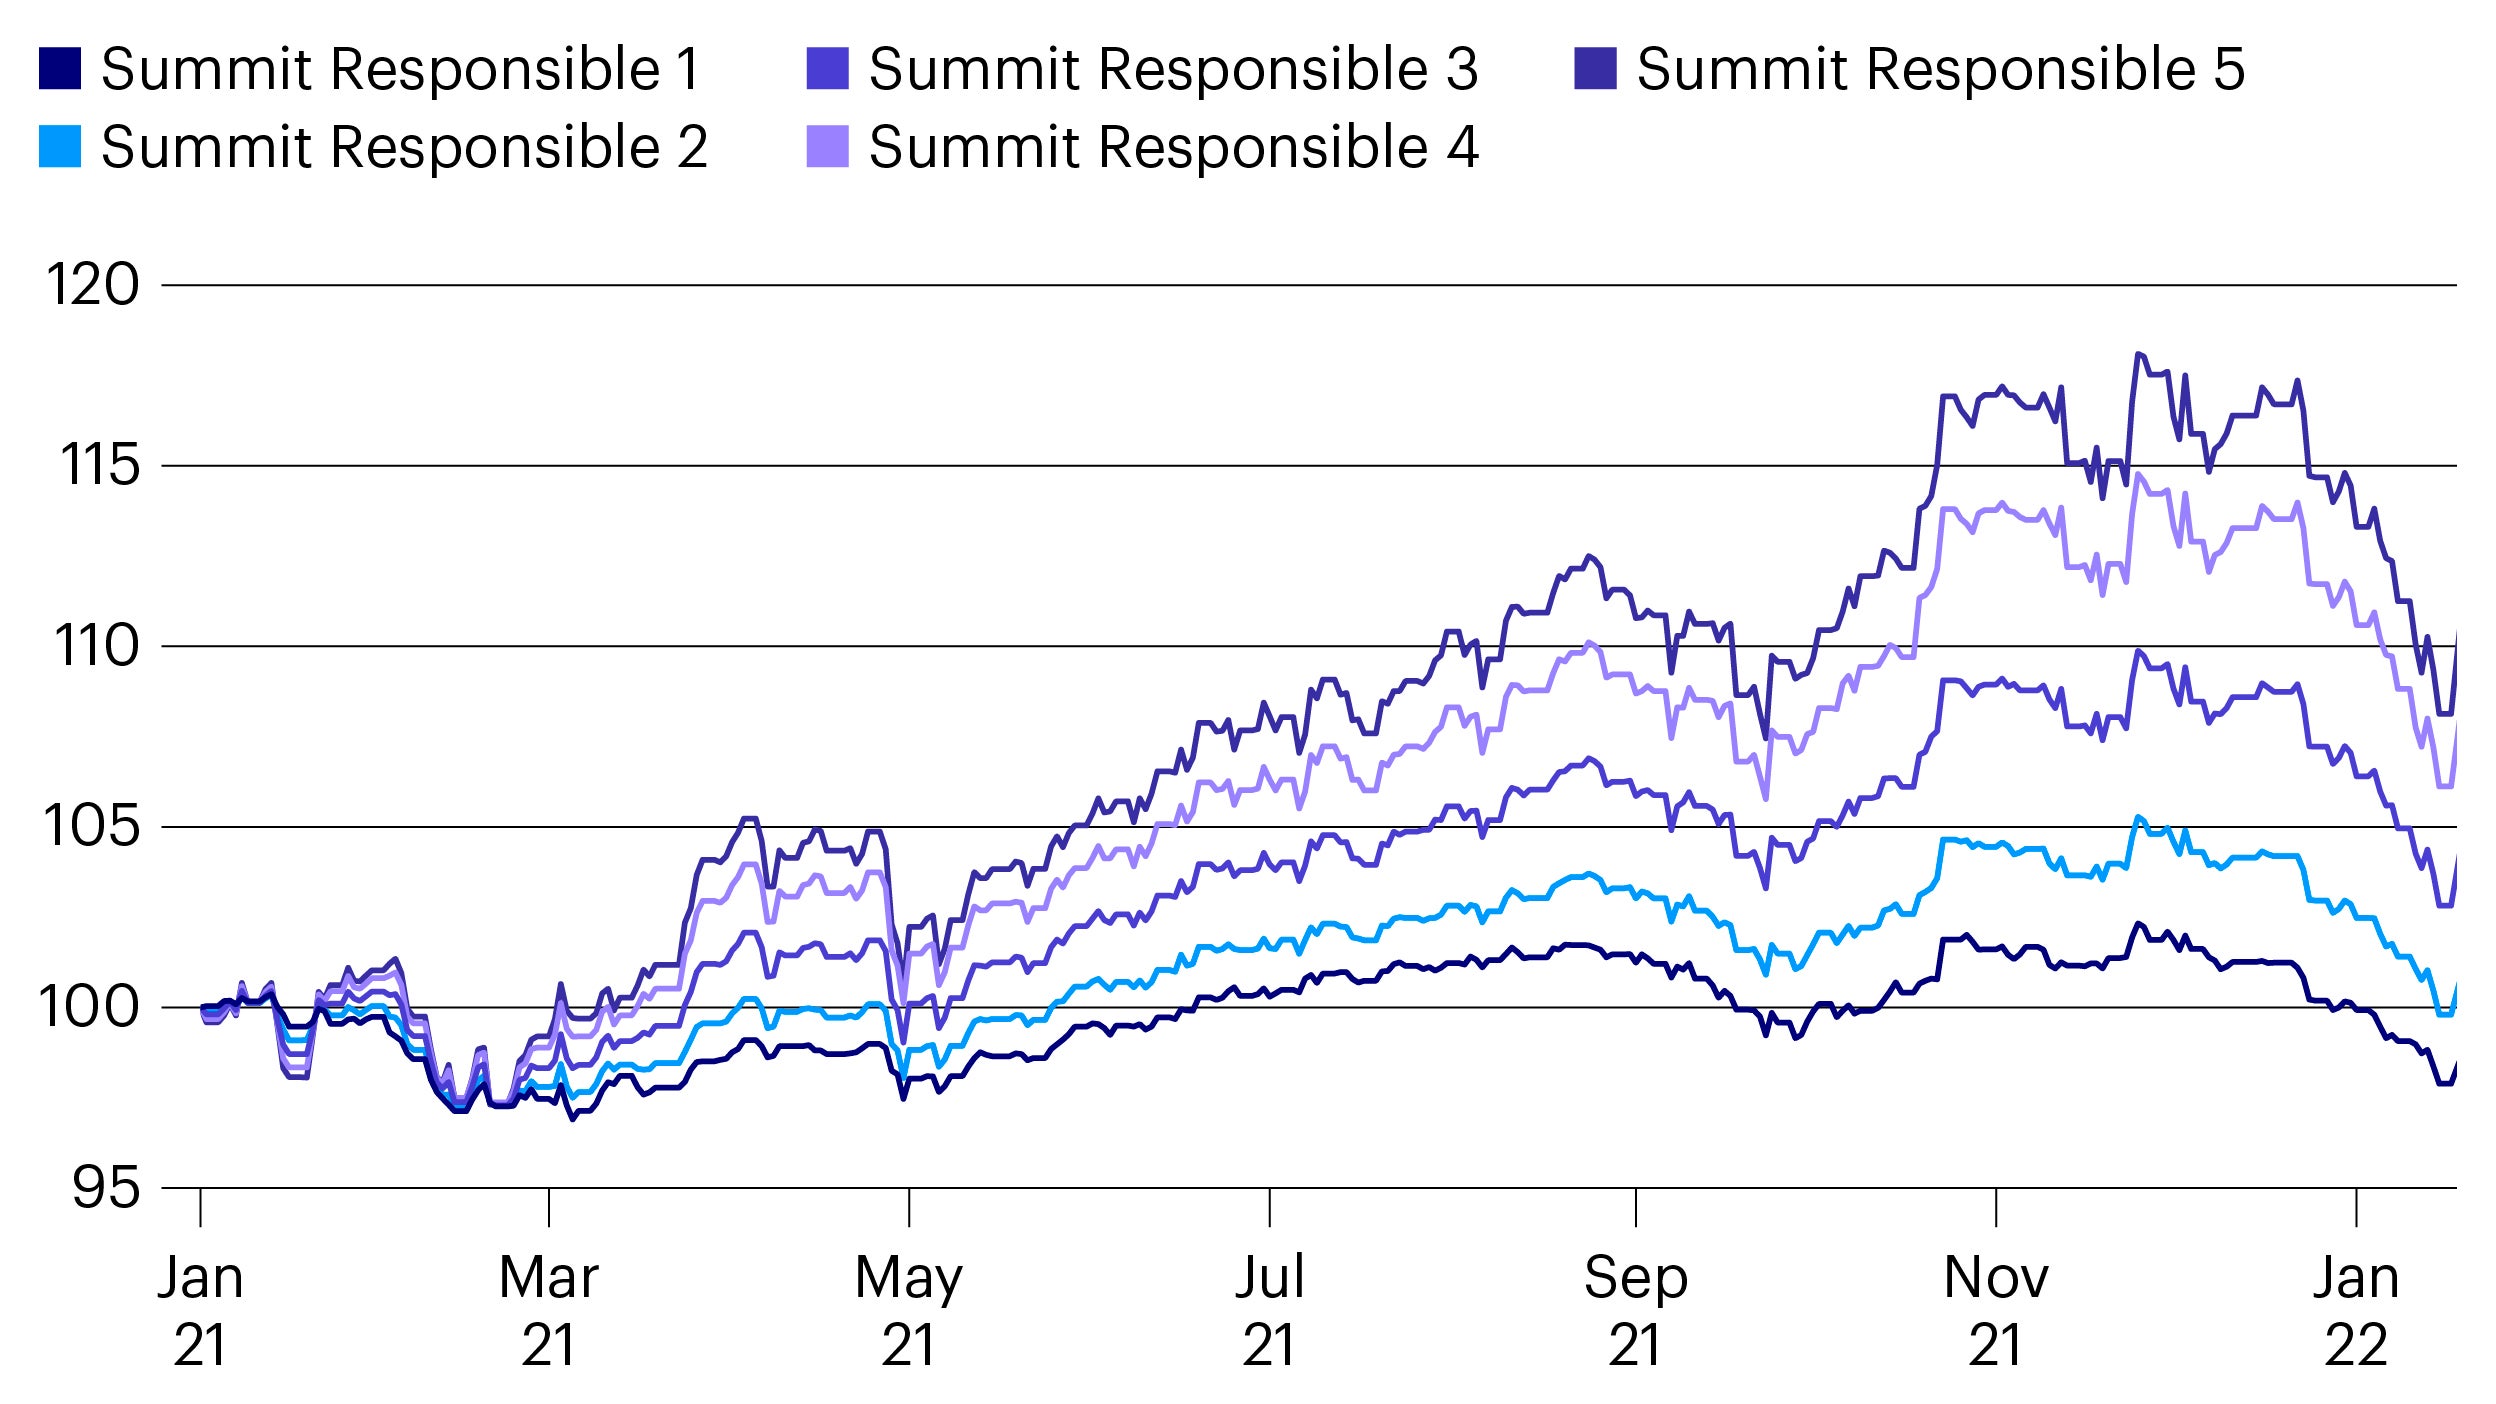 Invesco Summit Responsible Range performance (%)